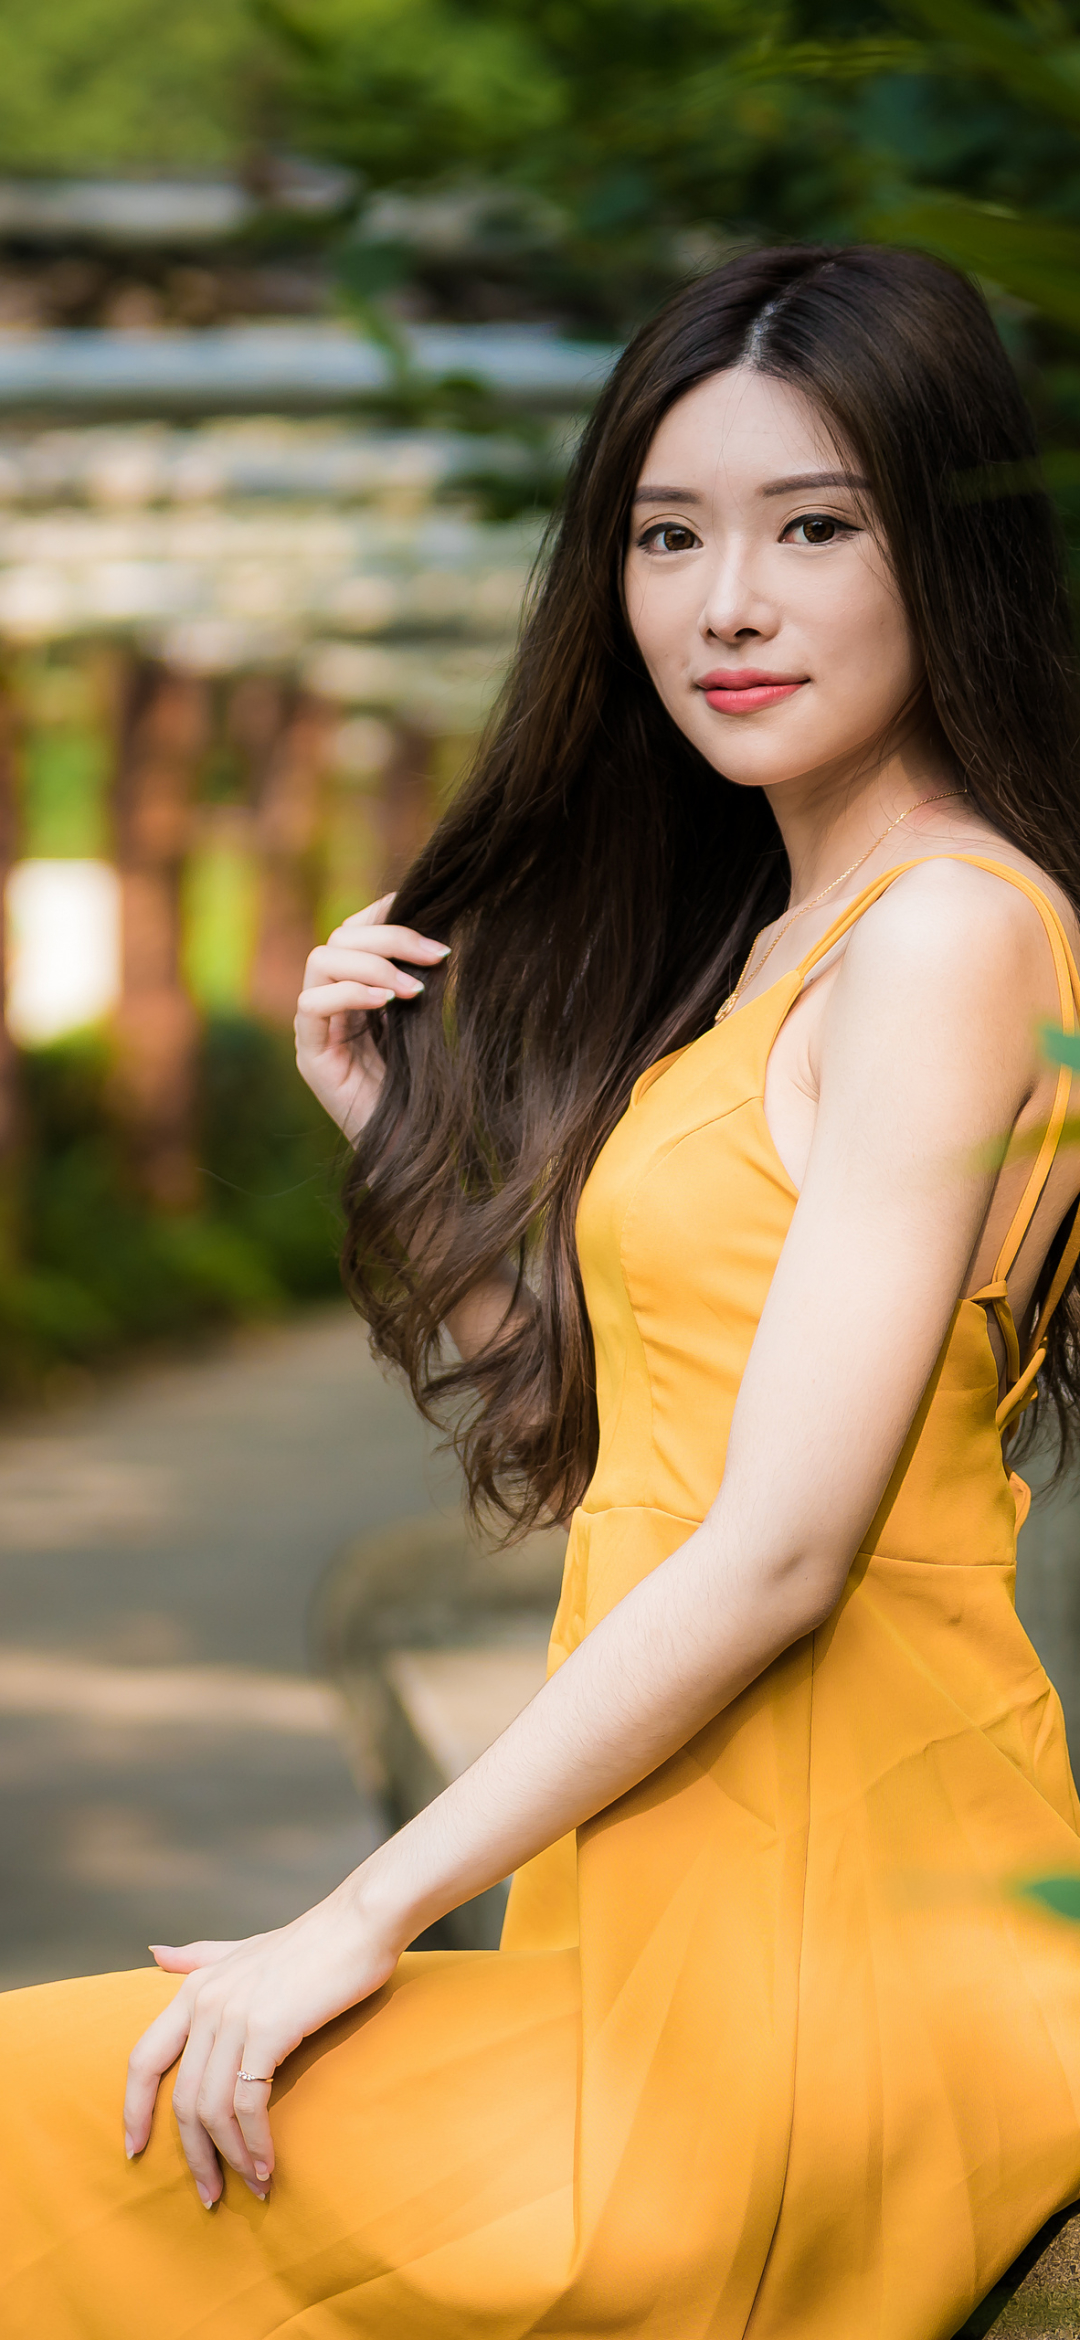 Handy-Wallpaper Modell, Frauen, Gelbes Kleid, Schwarzes Haar, Asiatinnen kostenlos herunterladen.